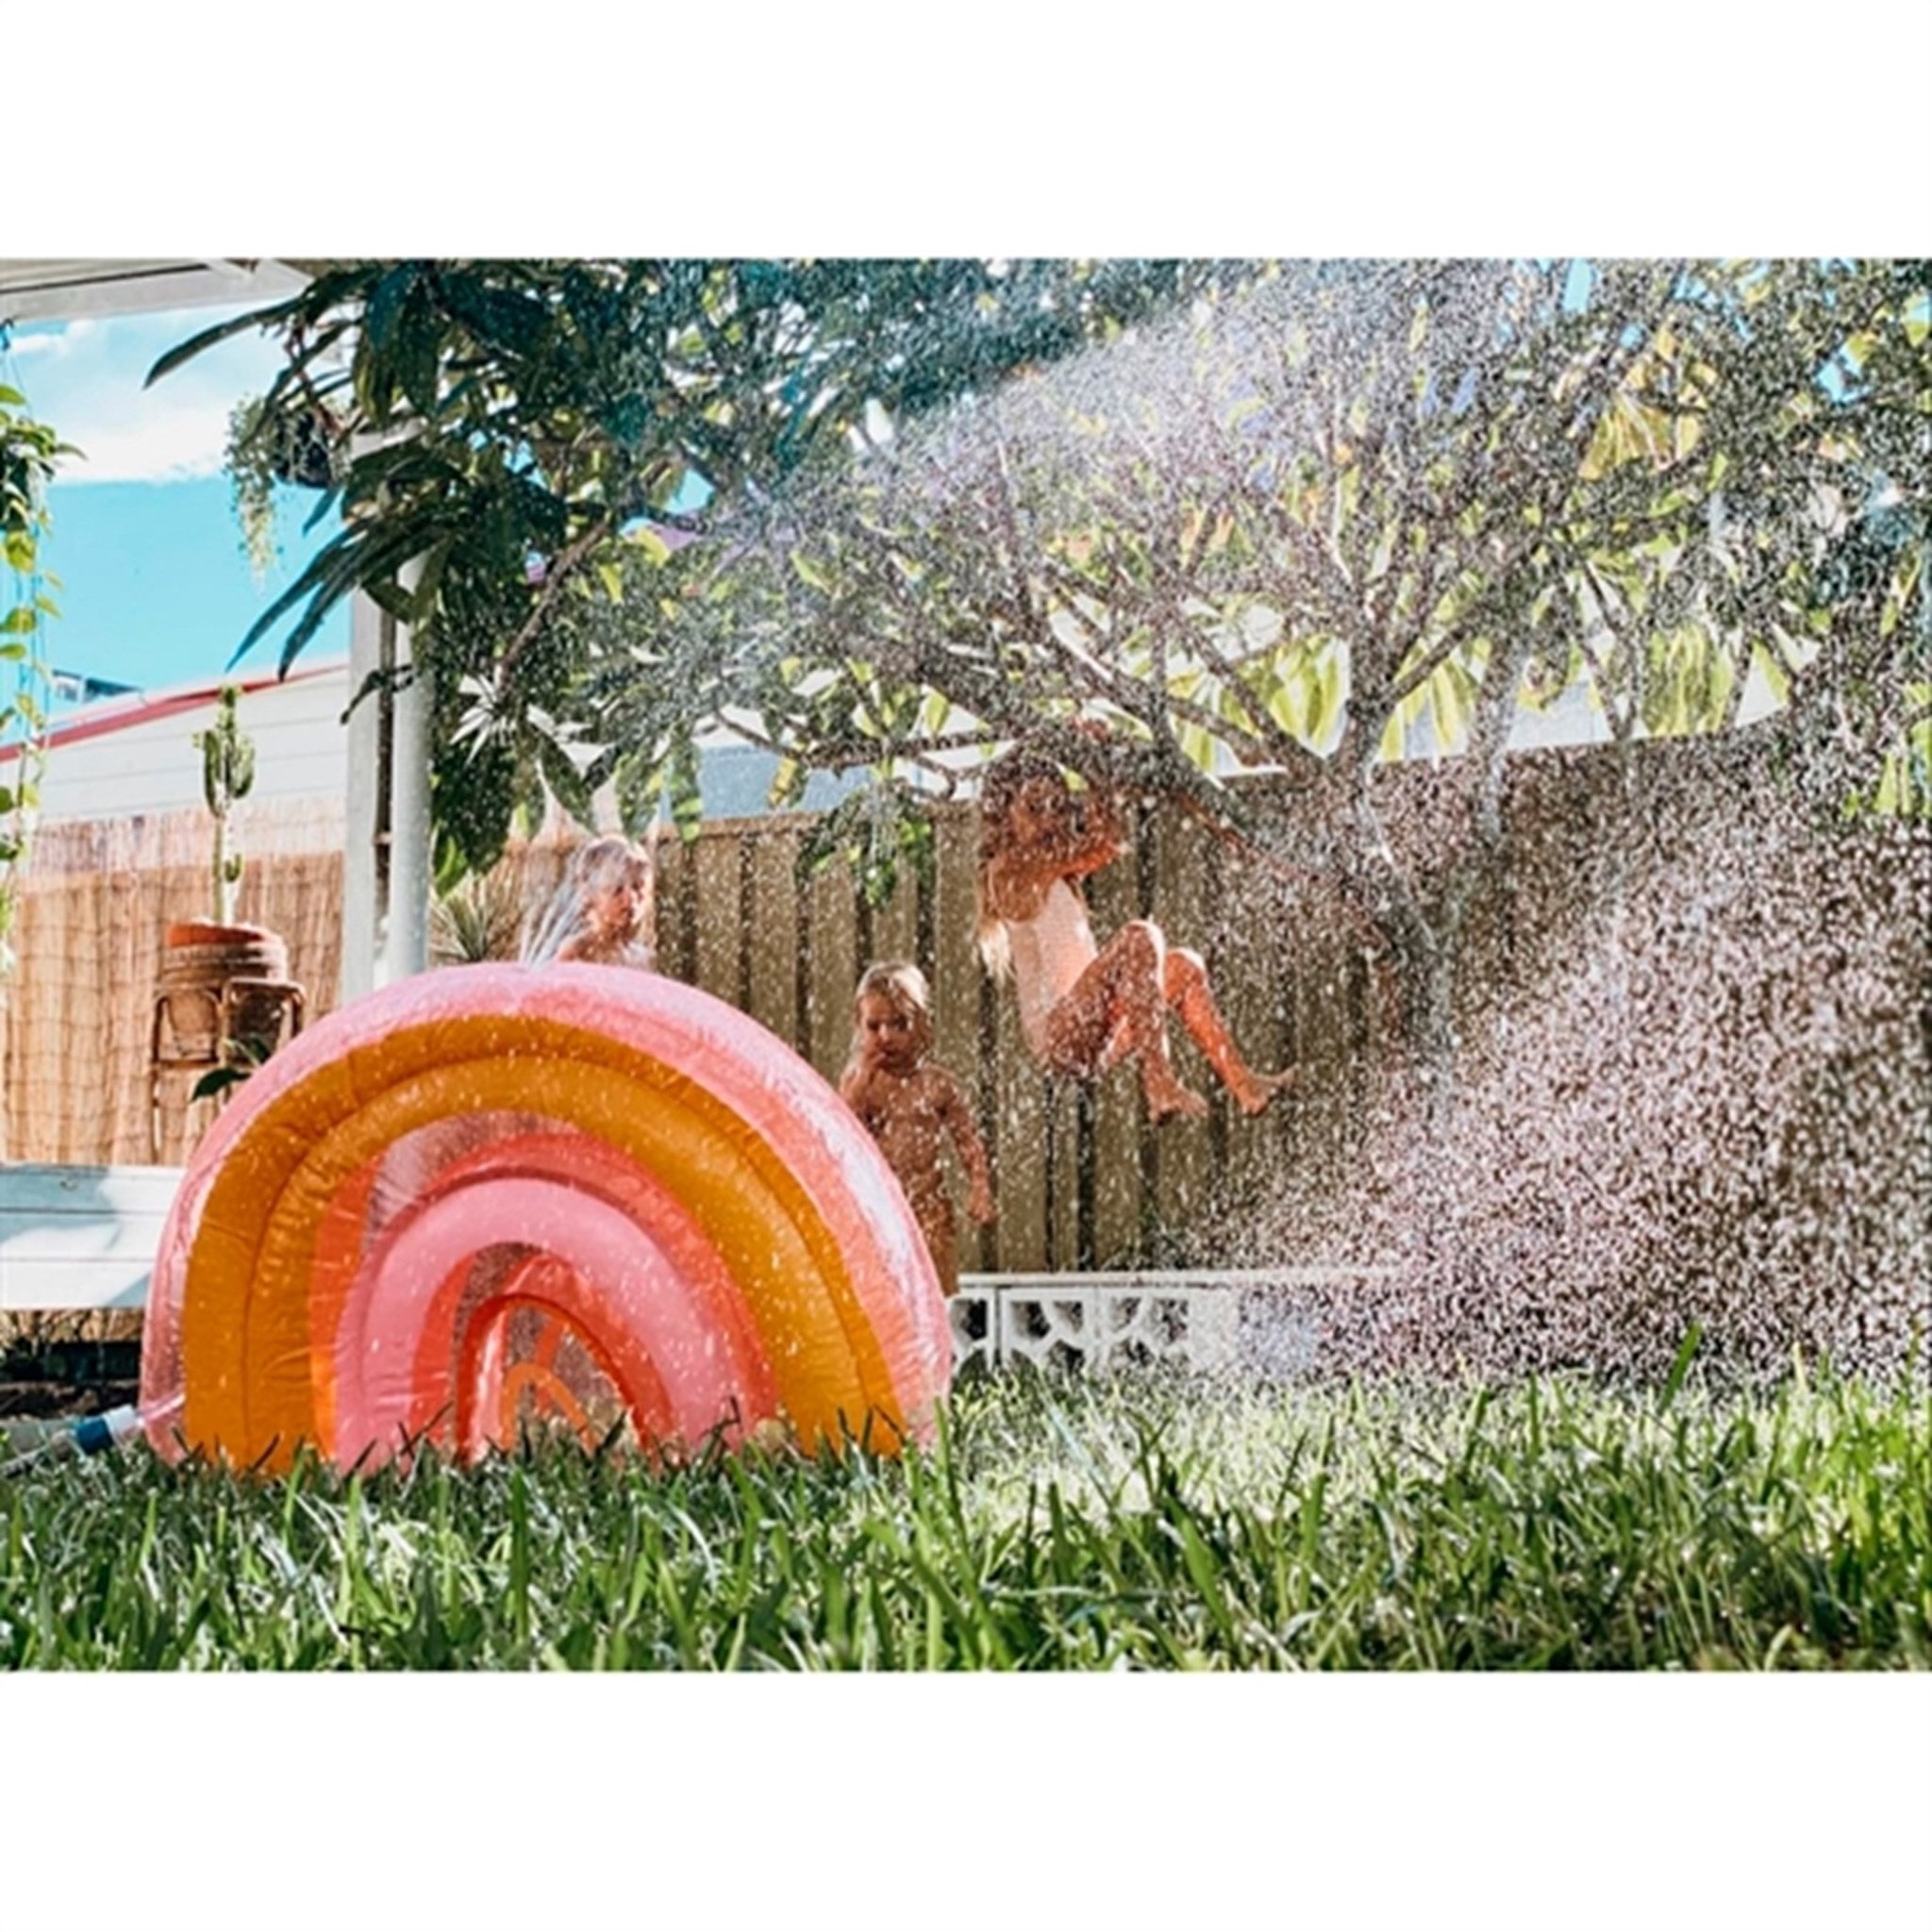 SunnyLife Inflatable Sprinkler Rainbow 3